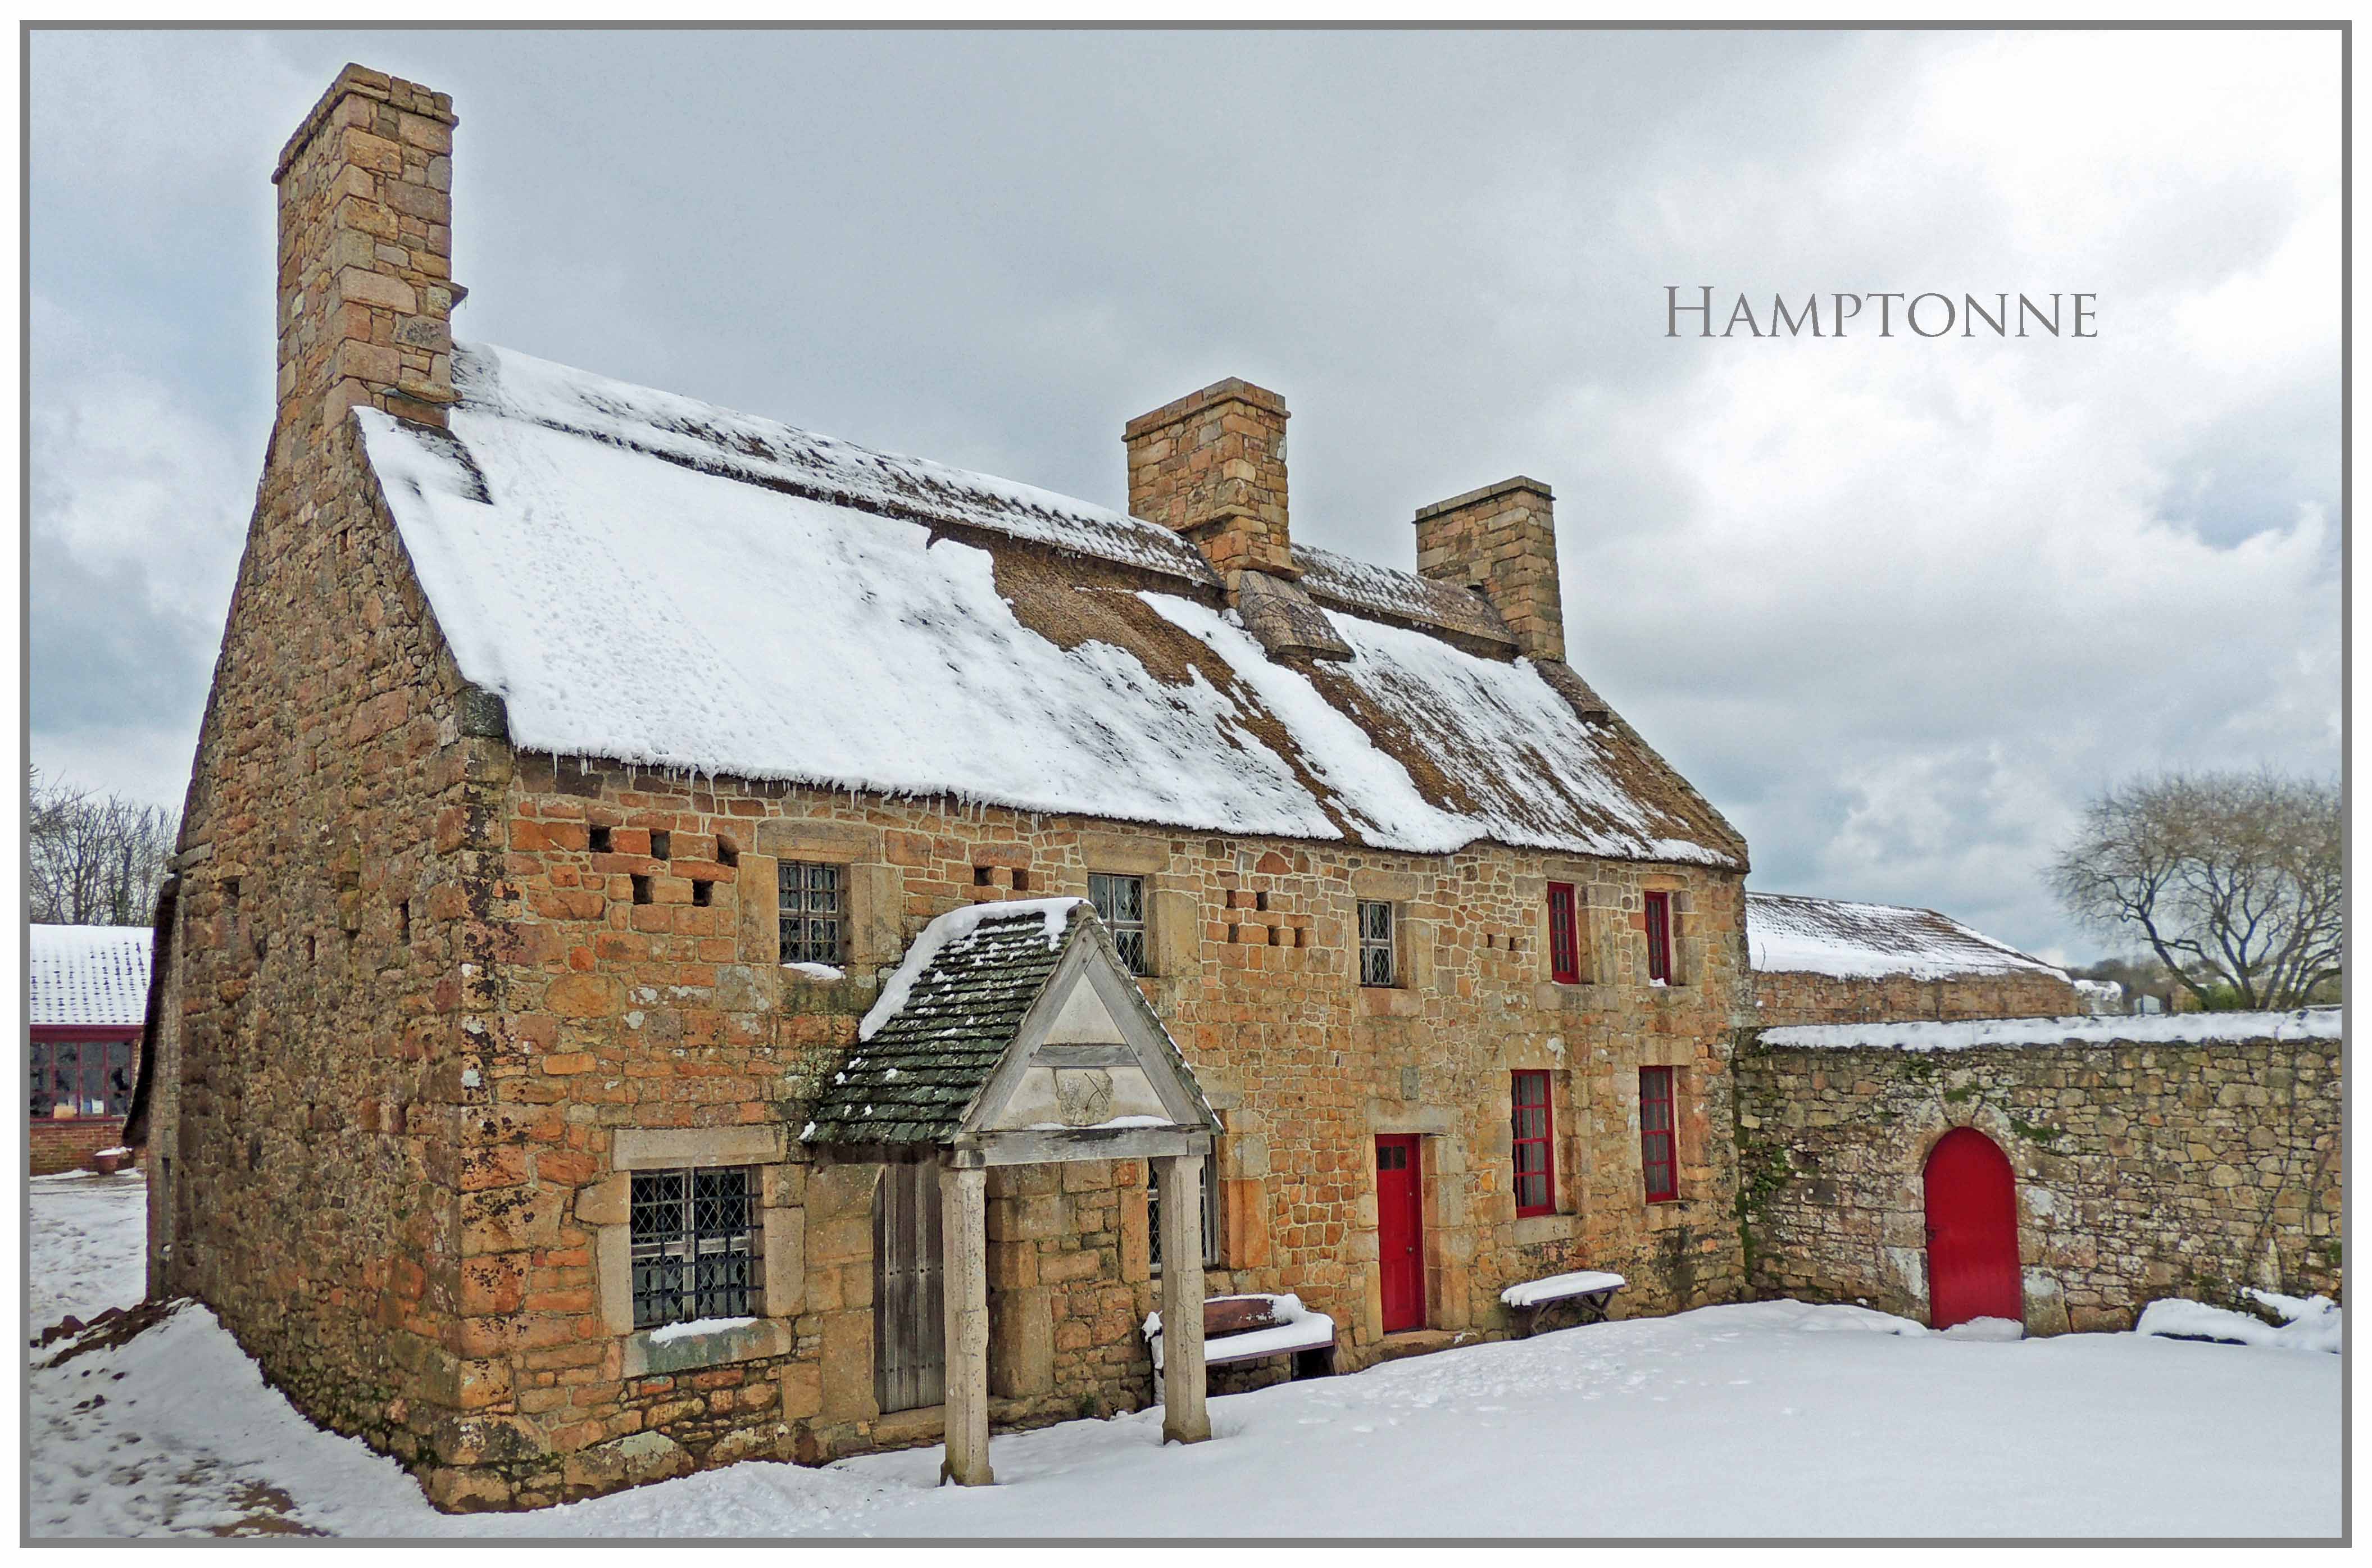 A Victorian Christmas at Hamptonne